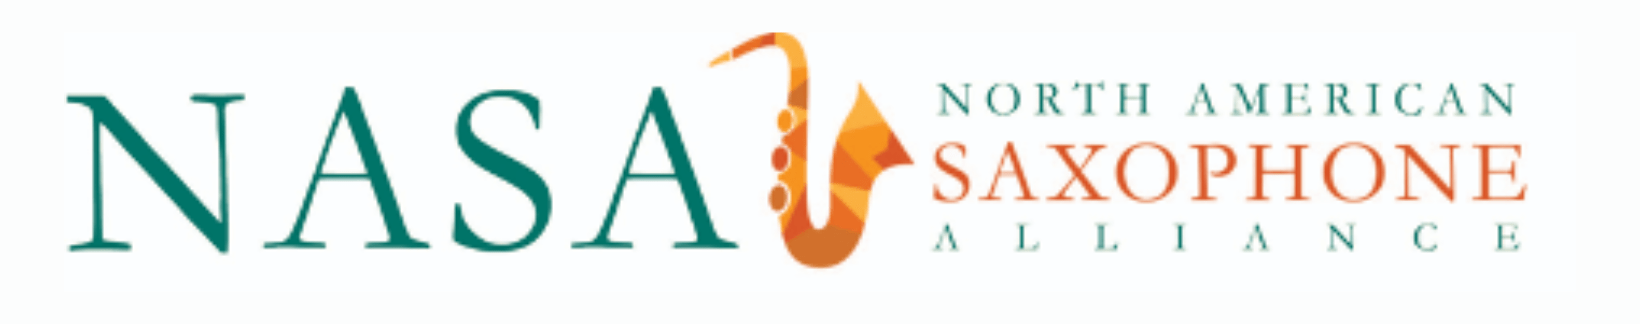 North American Saxophone Alliance logo